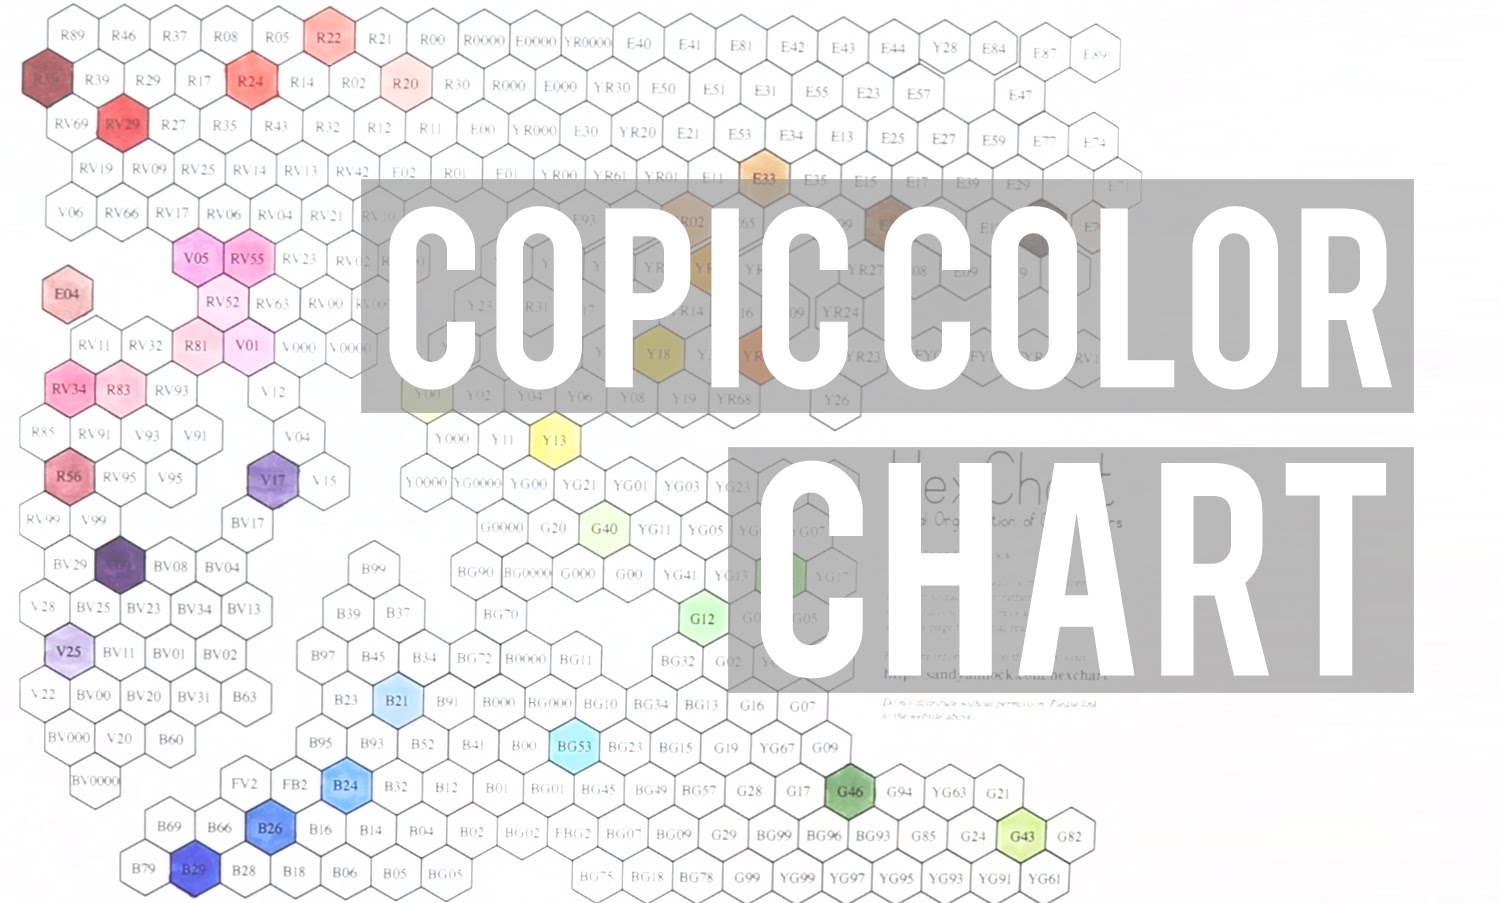 Copic Color Chart Pdf